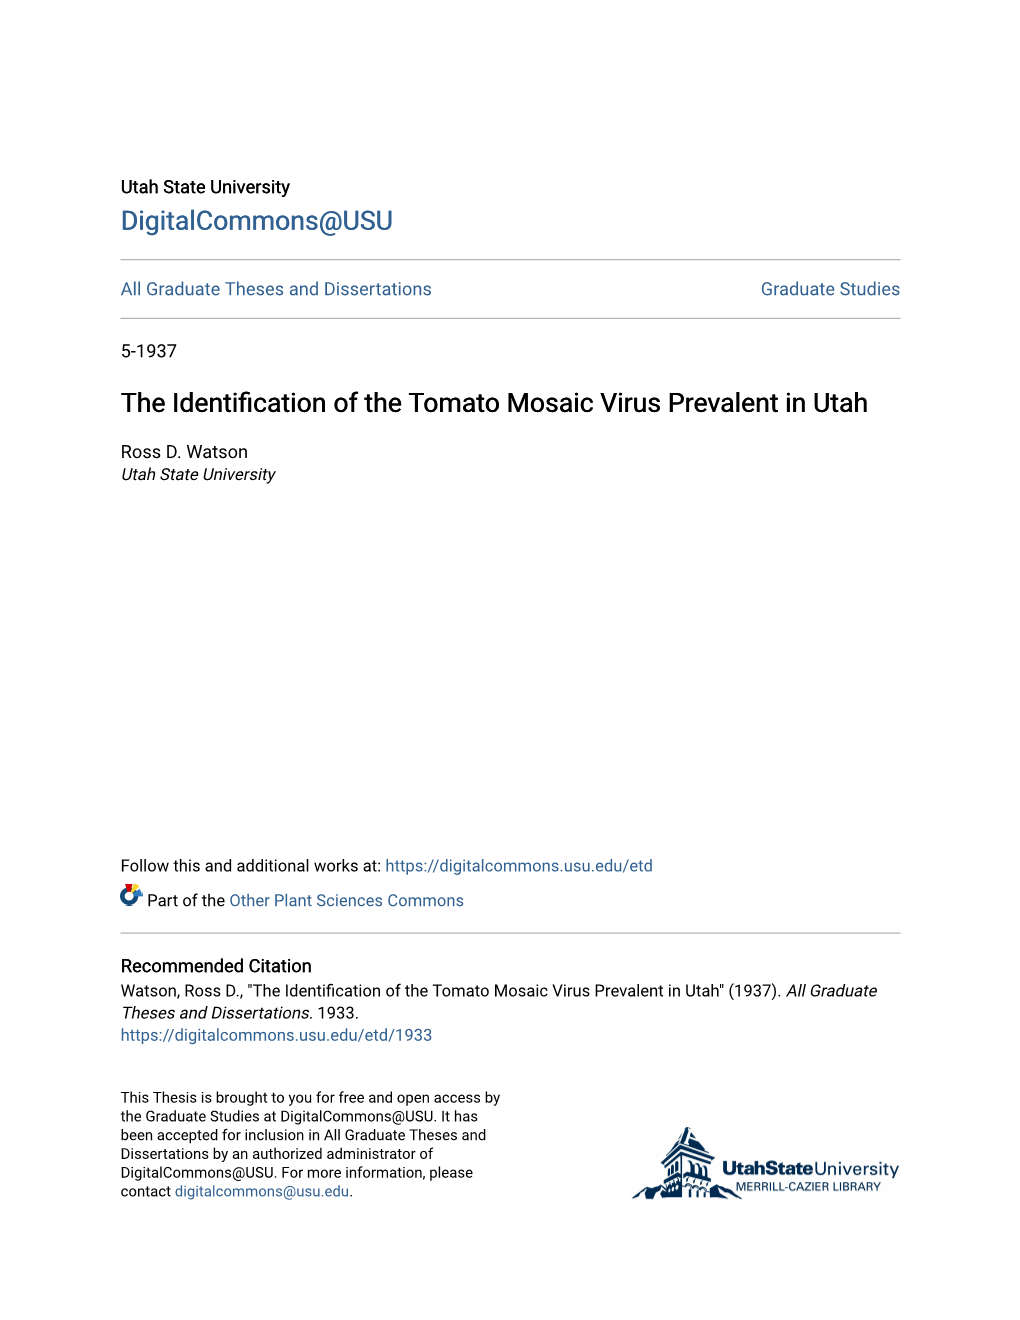 The Identification of the Tomato Mosaic Virus Prevalent in Utah